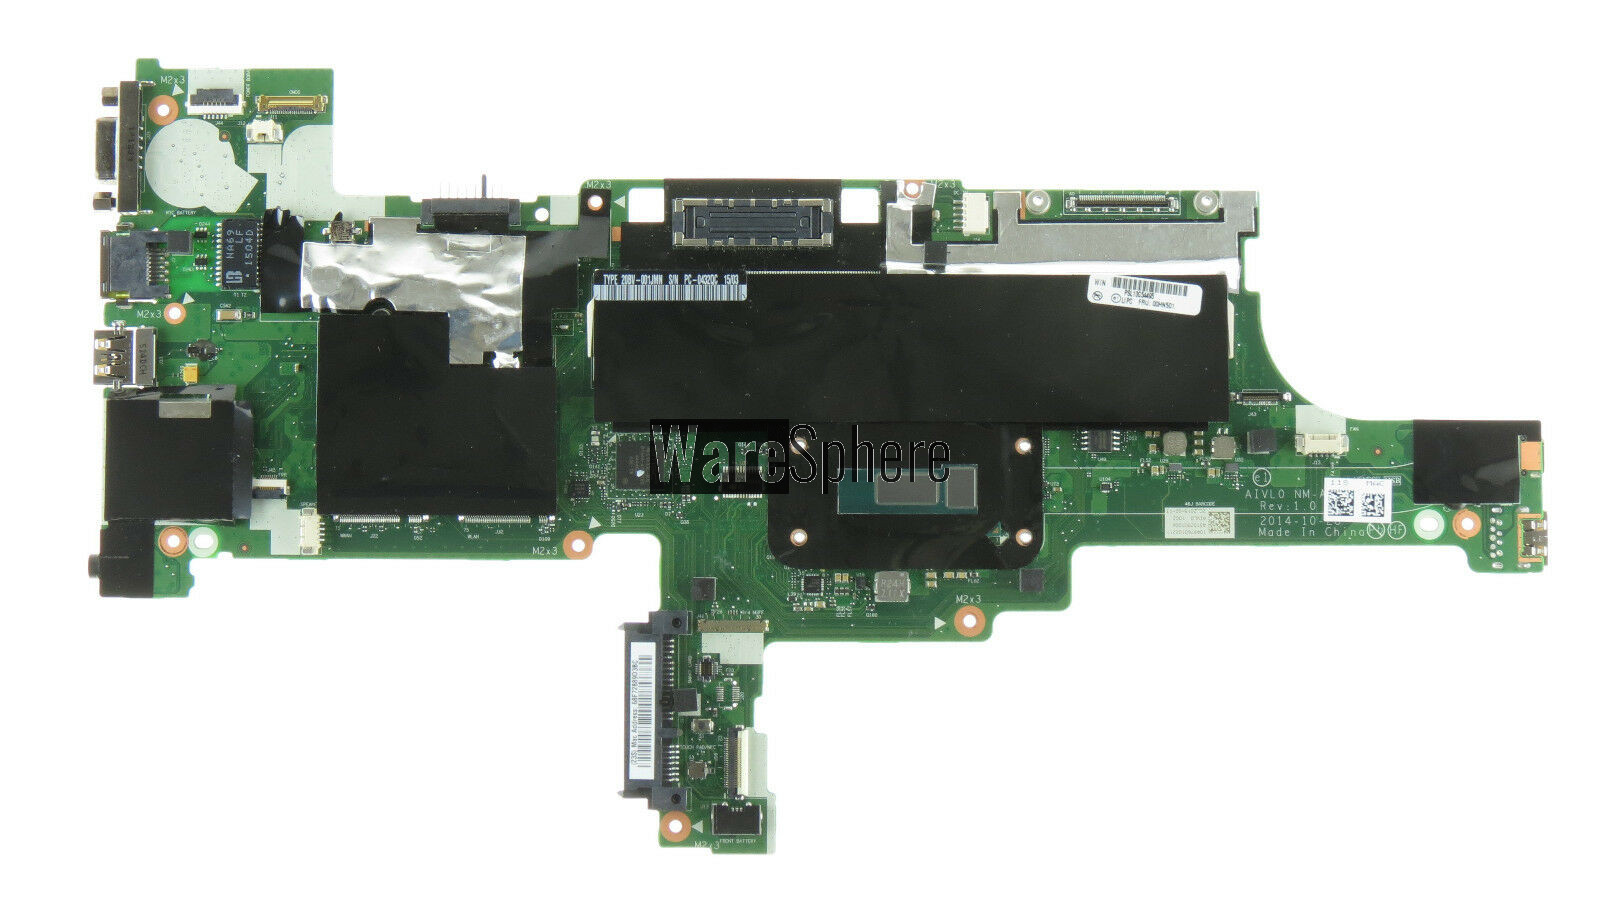 Motherboard System Board Intel i7-5500U with Discrete Nvidia Graphics for Lenovo Thinkpad T450 00HN517